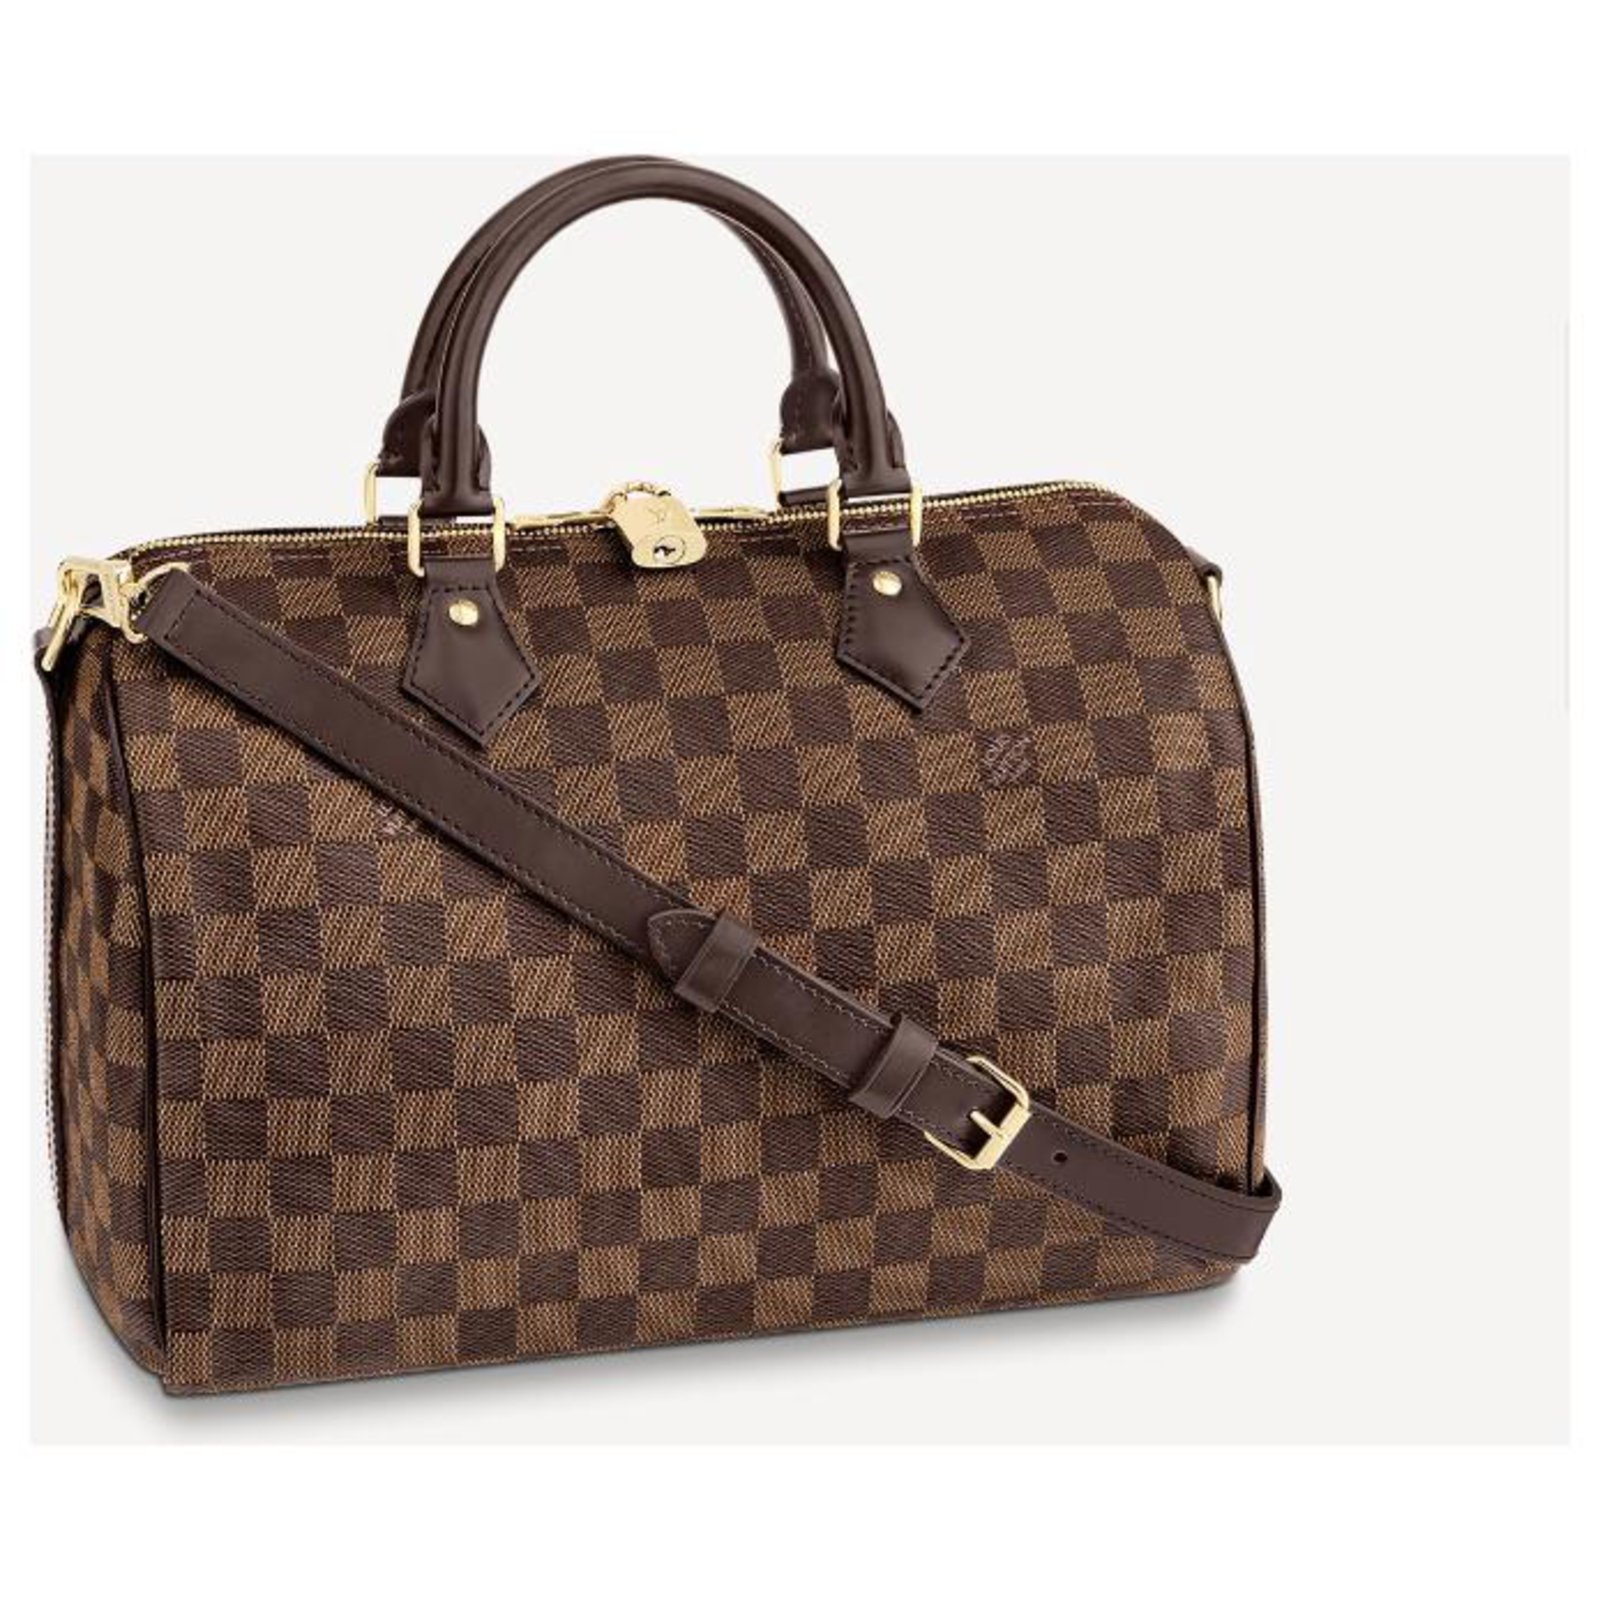 https://cdn1.jolicloset.com/imgr/full/2020/11/237536-1/louis-vuitton-brown-leather-lv-speedy-30-new-handbags.jpg